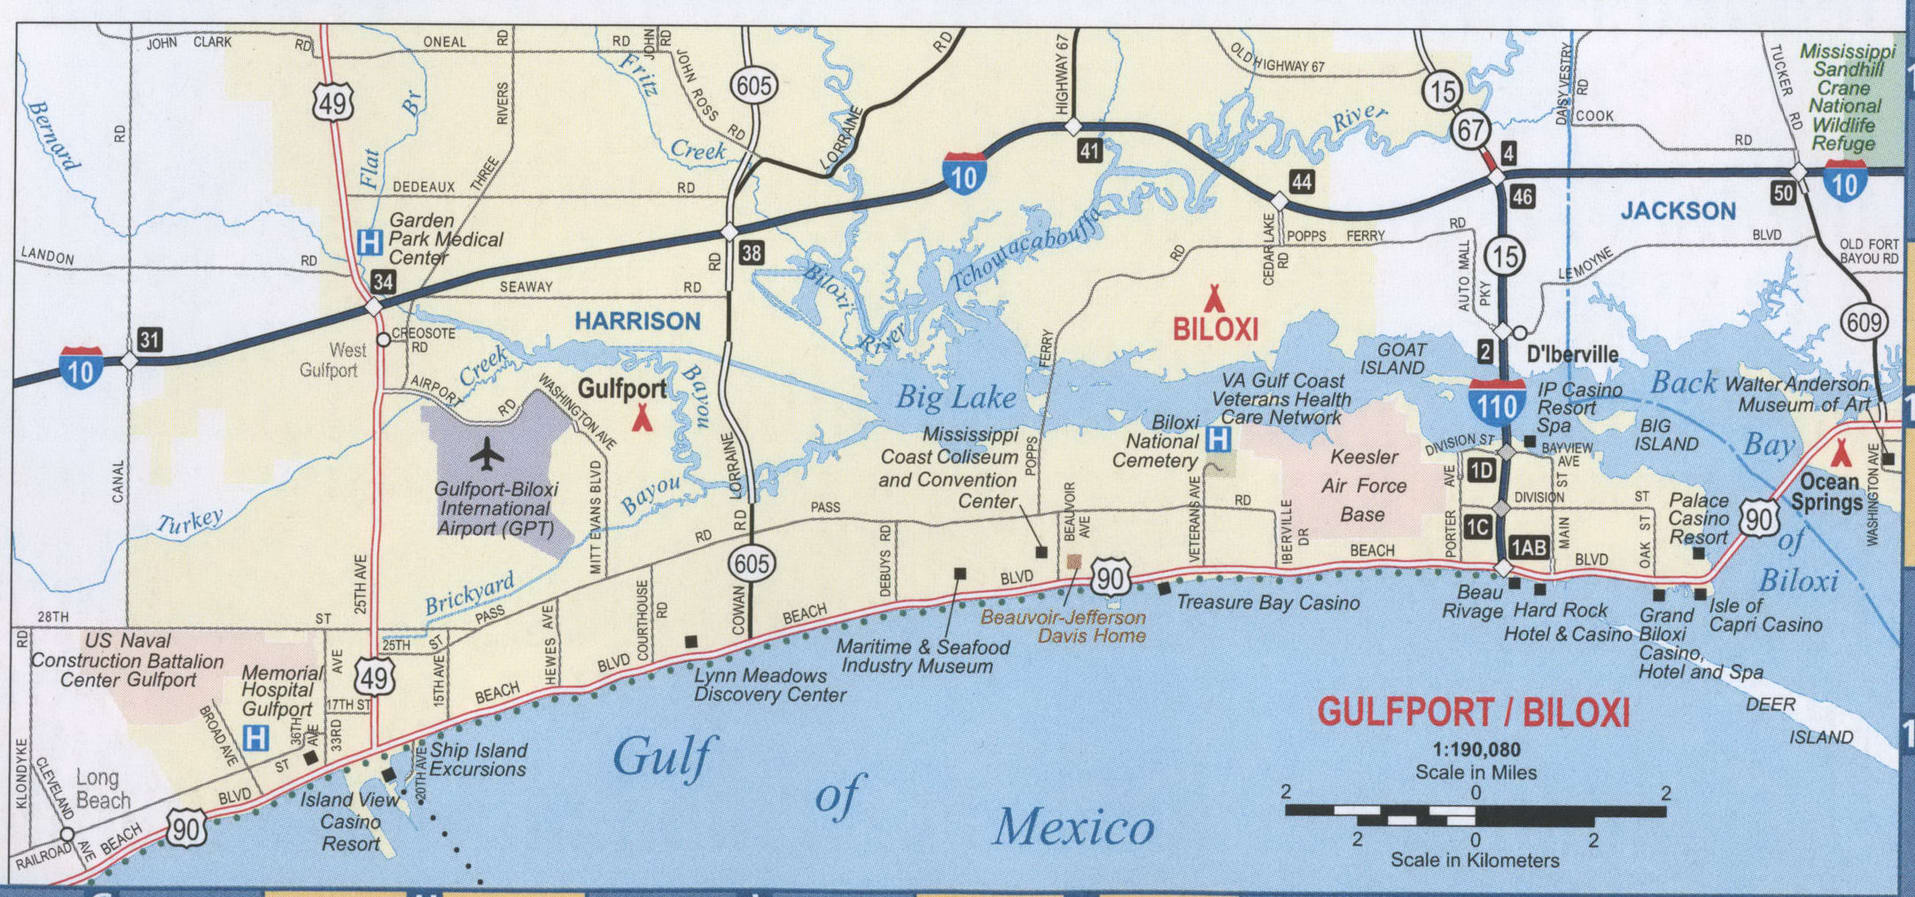 Biloxi map mississippi gulfport gulf coast pascagoula mexico between